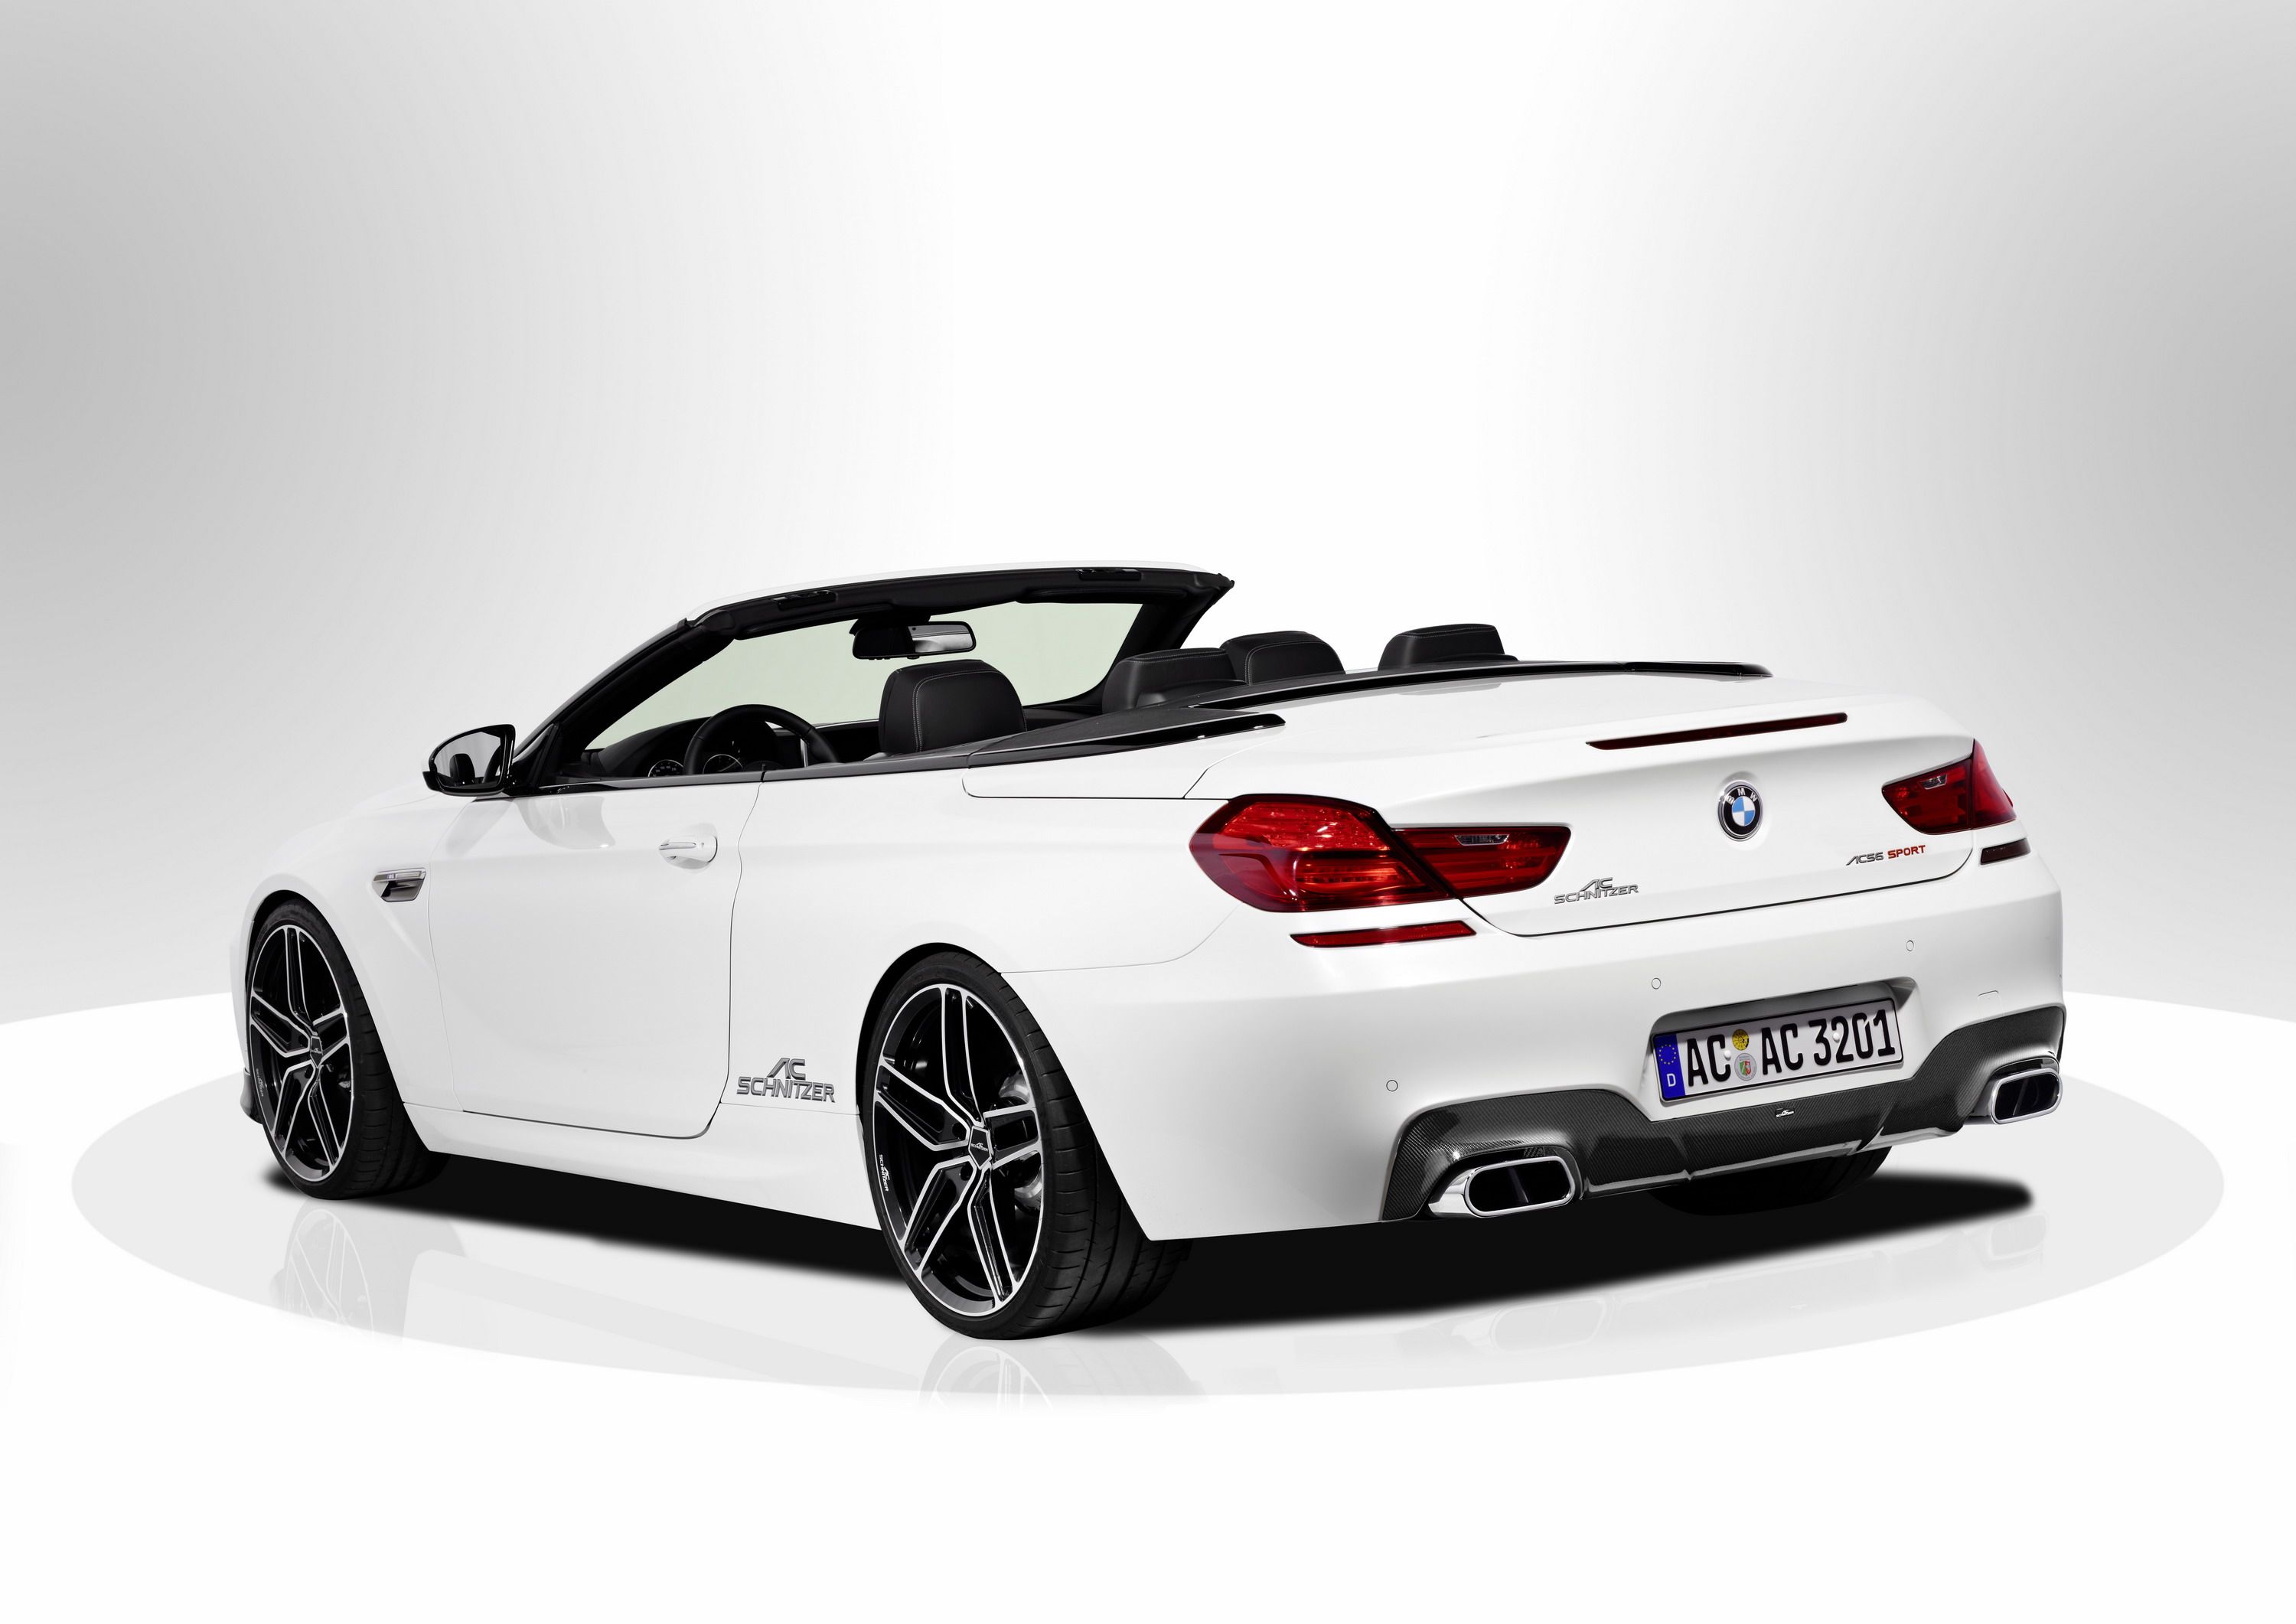 2013 BMW M6 by AC Schnitzer